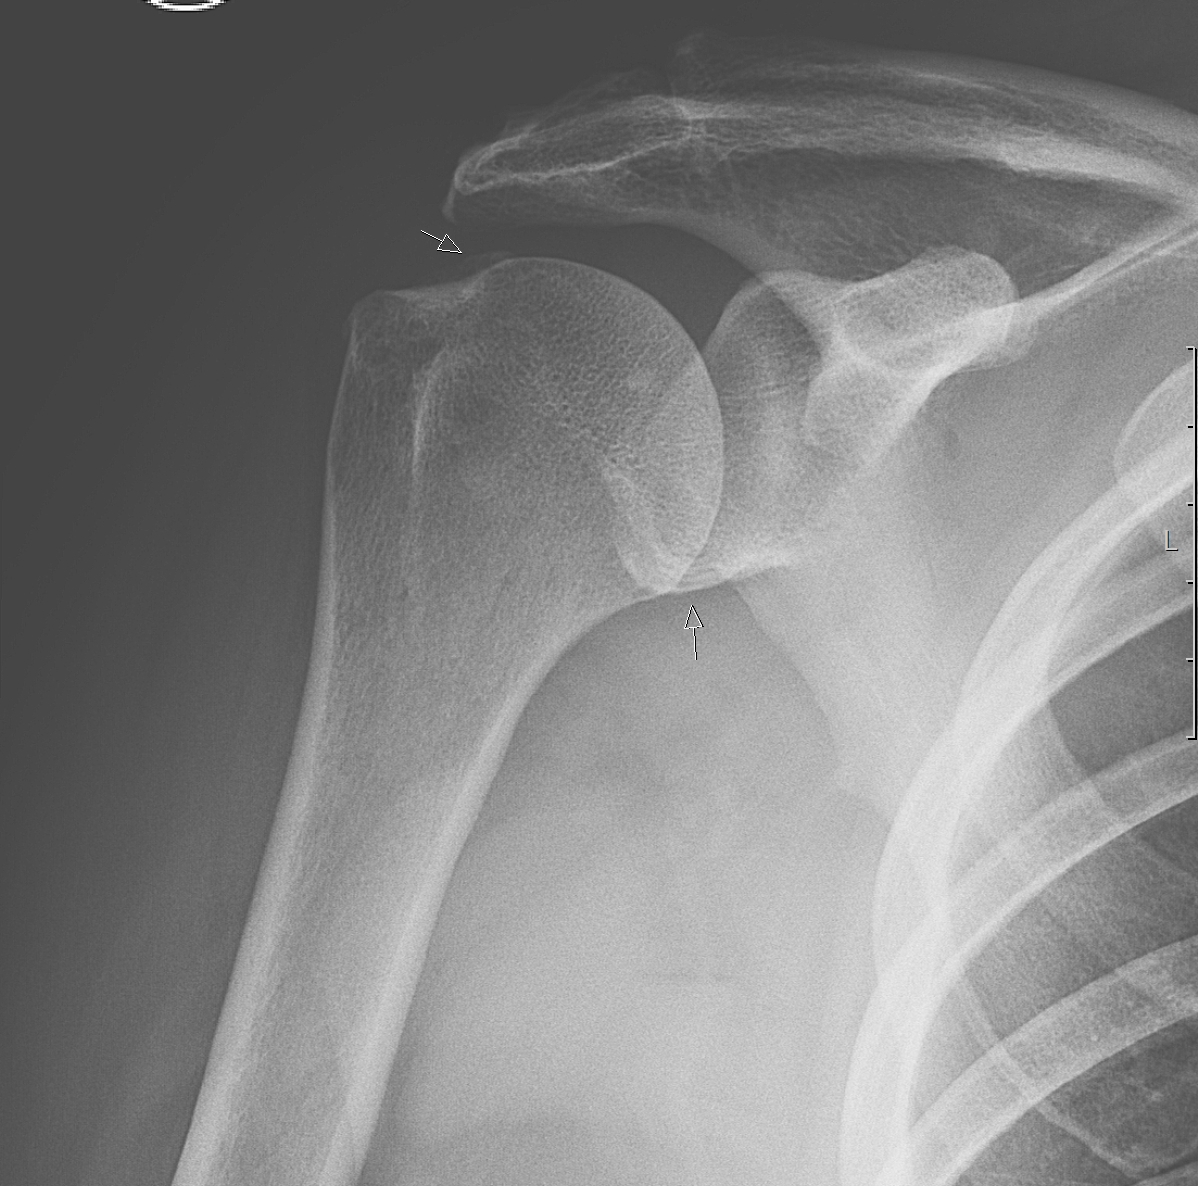 Вывих плечевого сустава рентген